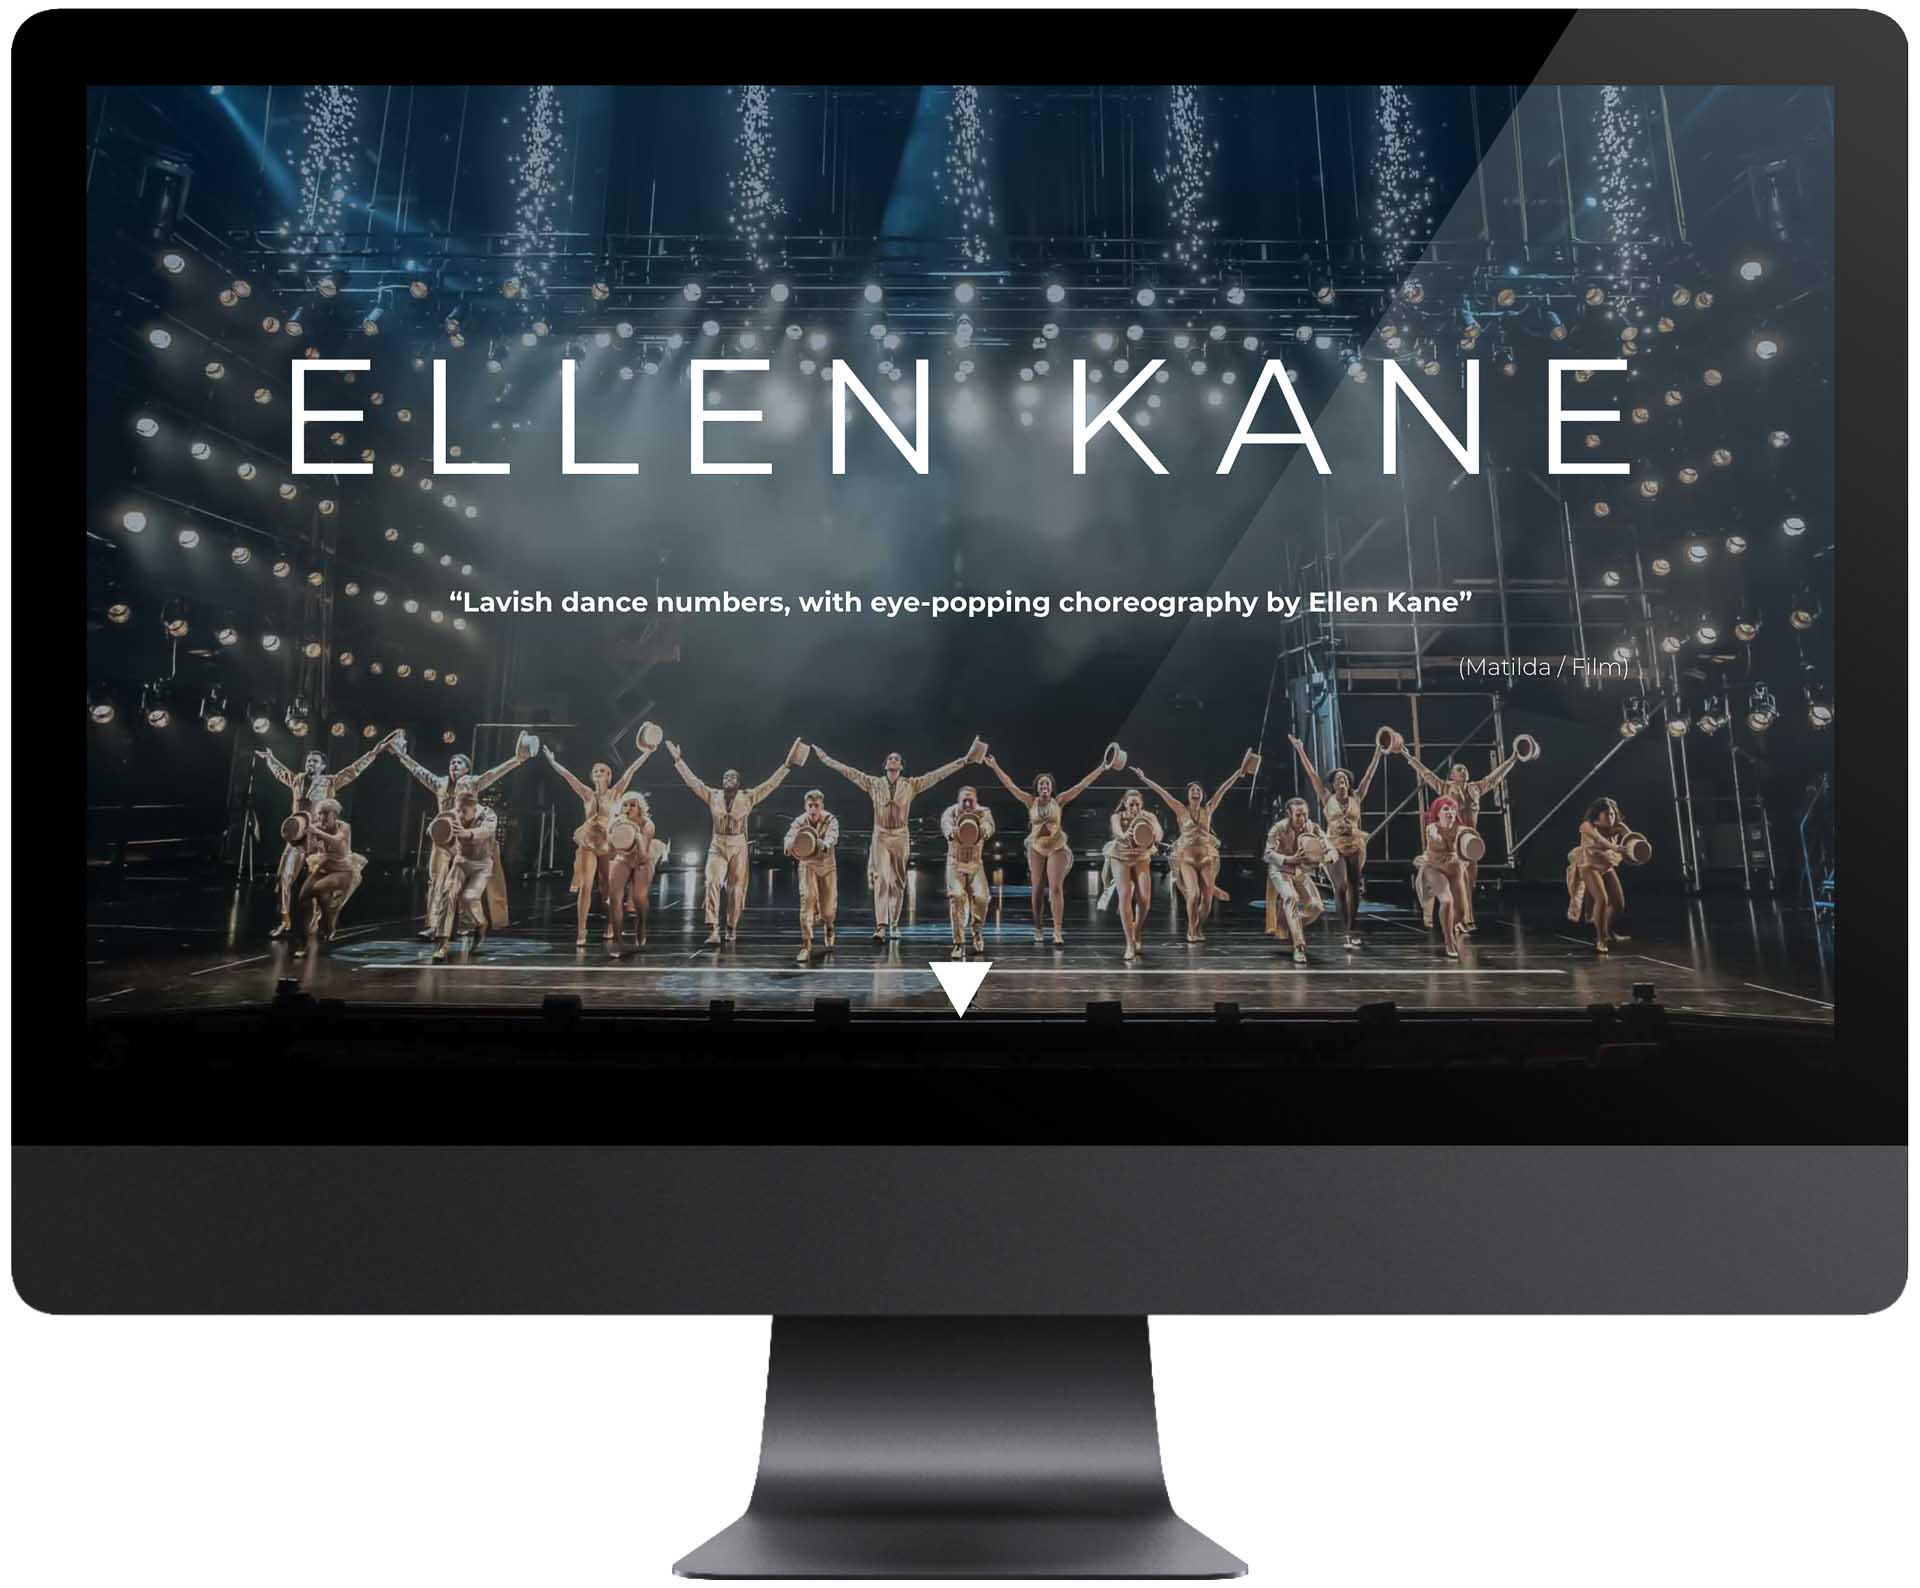 Ellen Kane Choreography